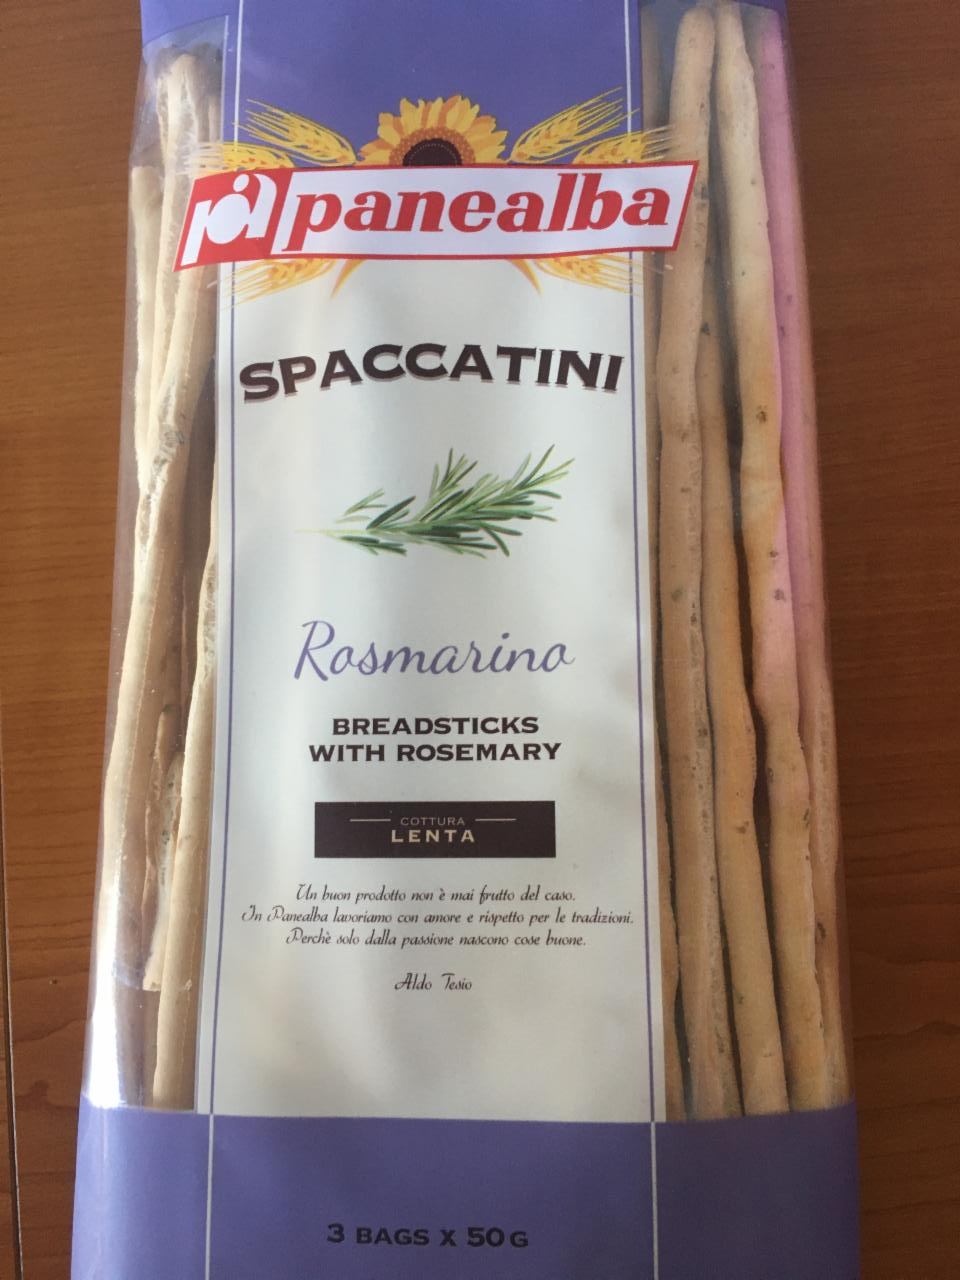 Fotografie - Spaccatini Rosmarino breadsticks Panealba